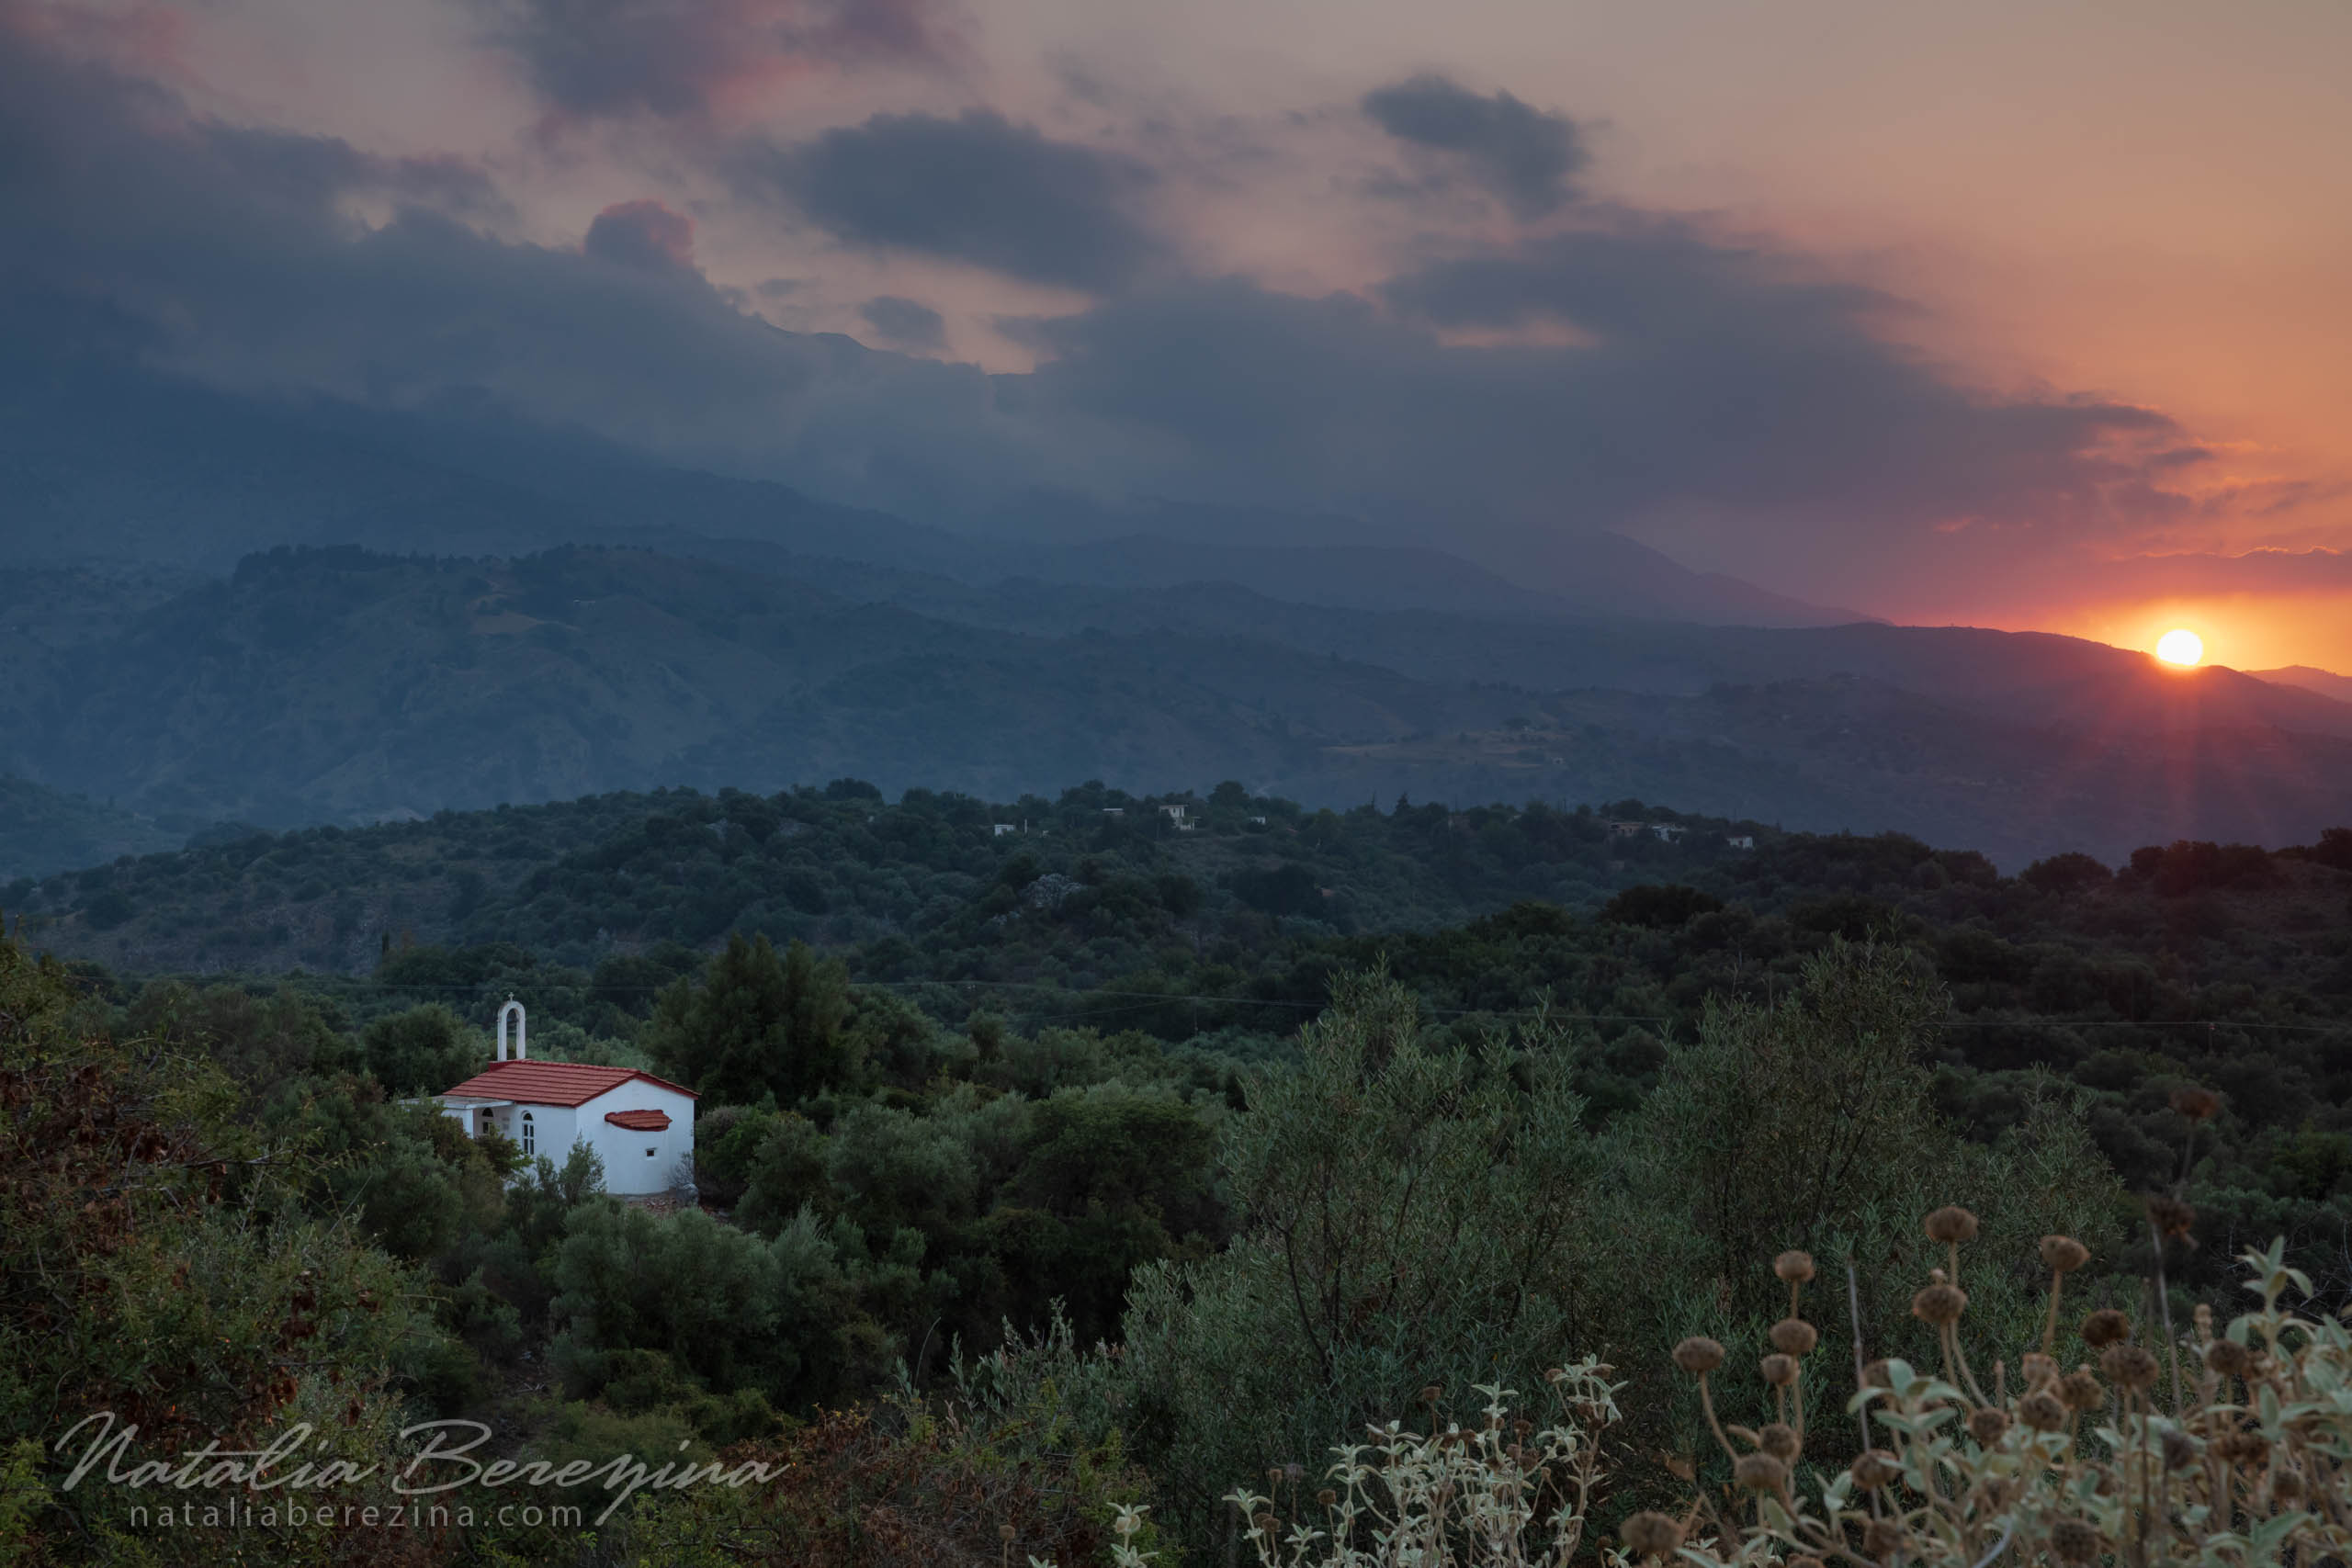 Greece, Crete, landscape, cloud, sunset, sunlight, church, orange CR1-NB0B4A9742 - Crete, Greece - Natalia Berezina Photography